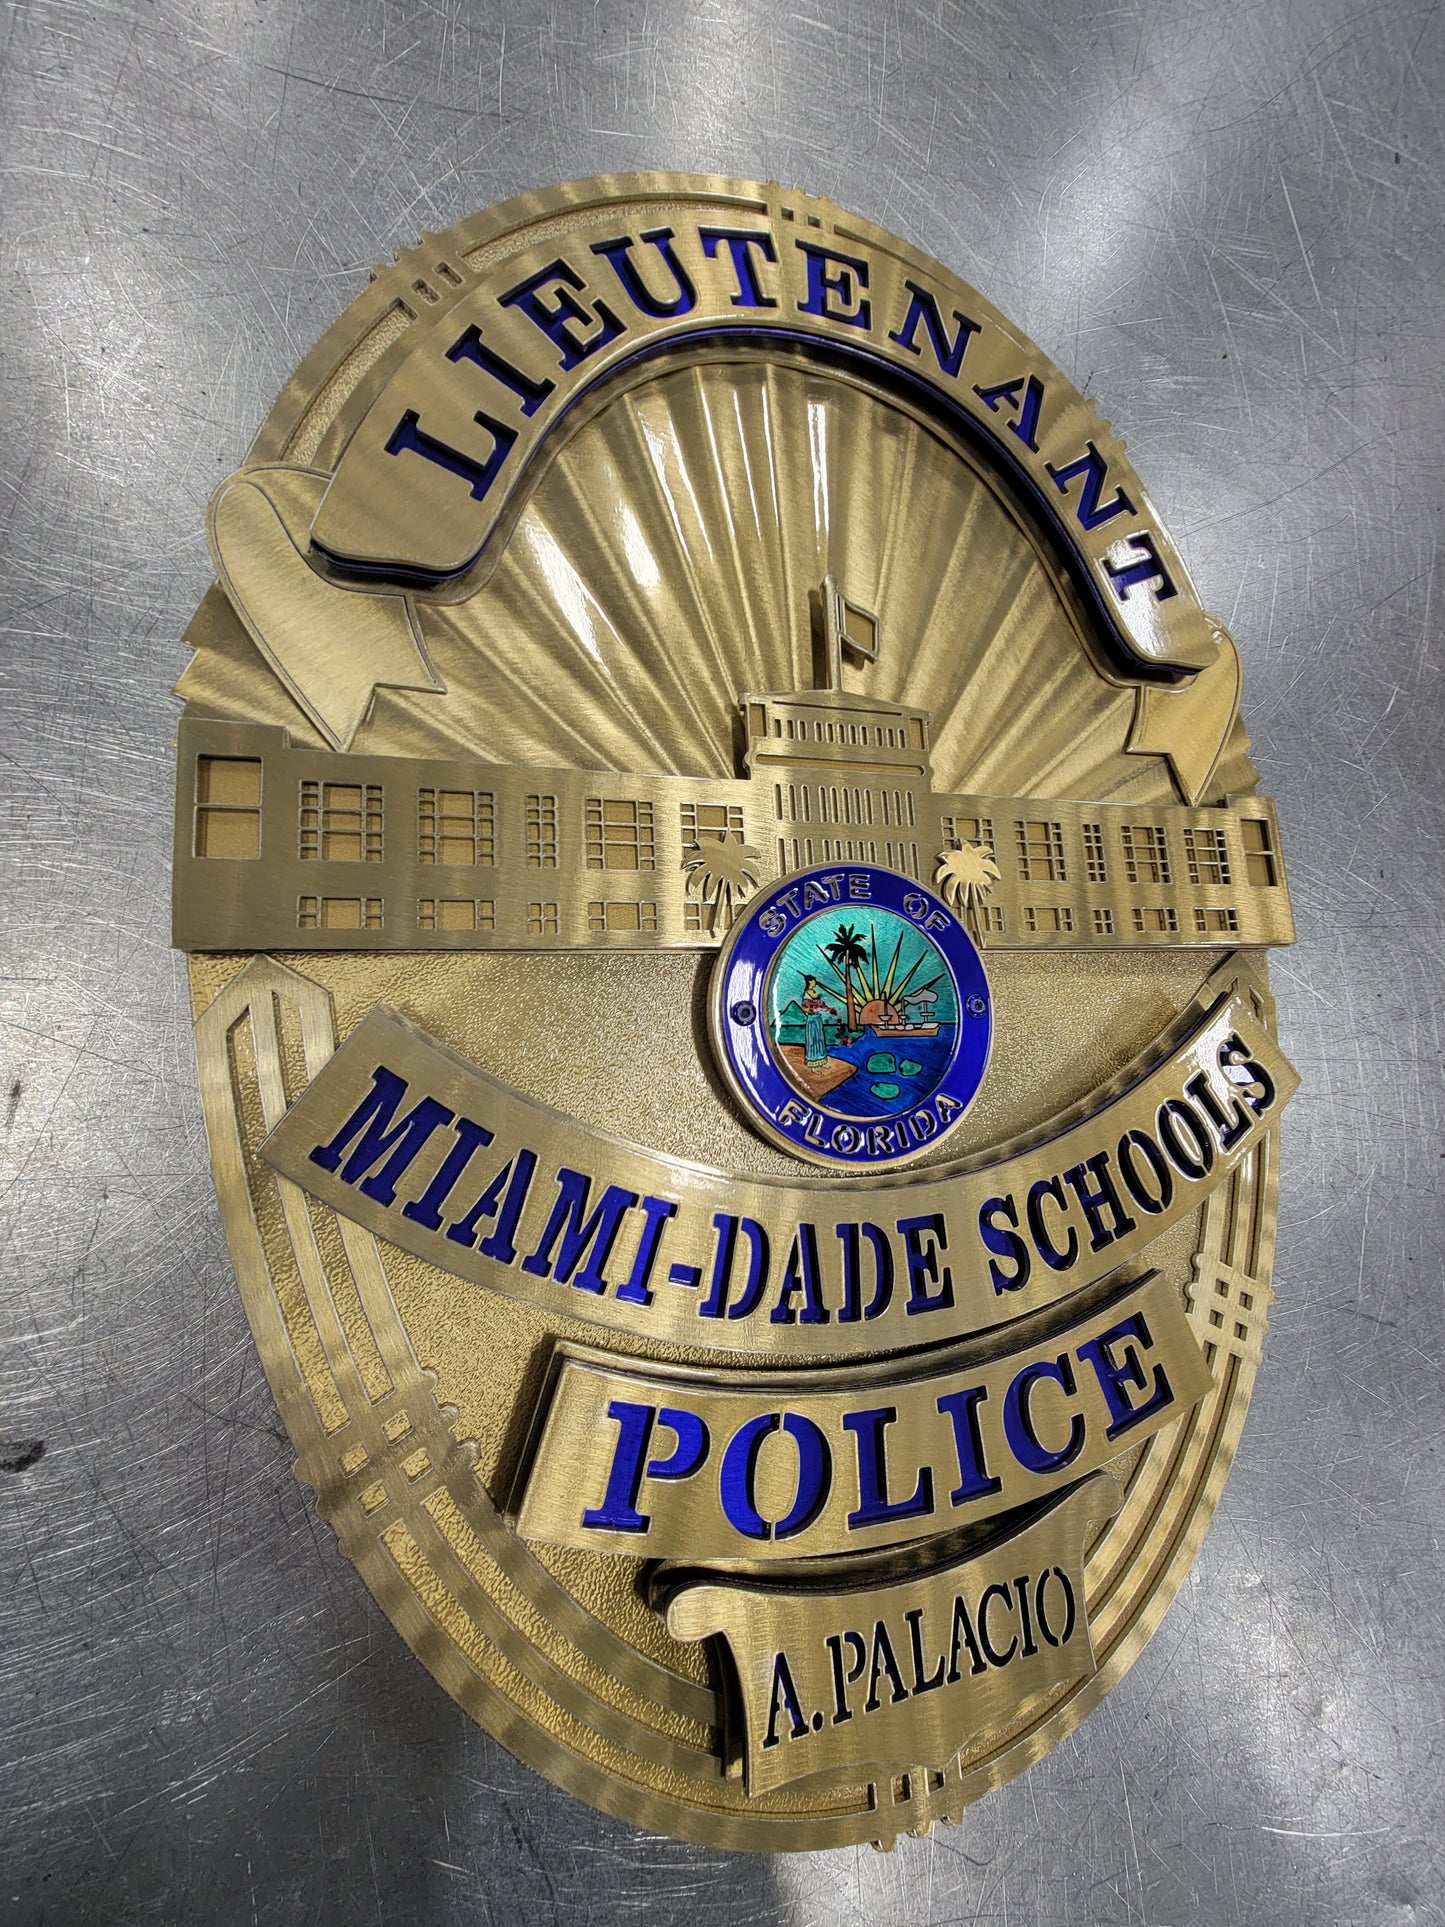 State Of Florida Miami-Dade Schools Police A. Palacio Badge